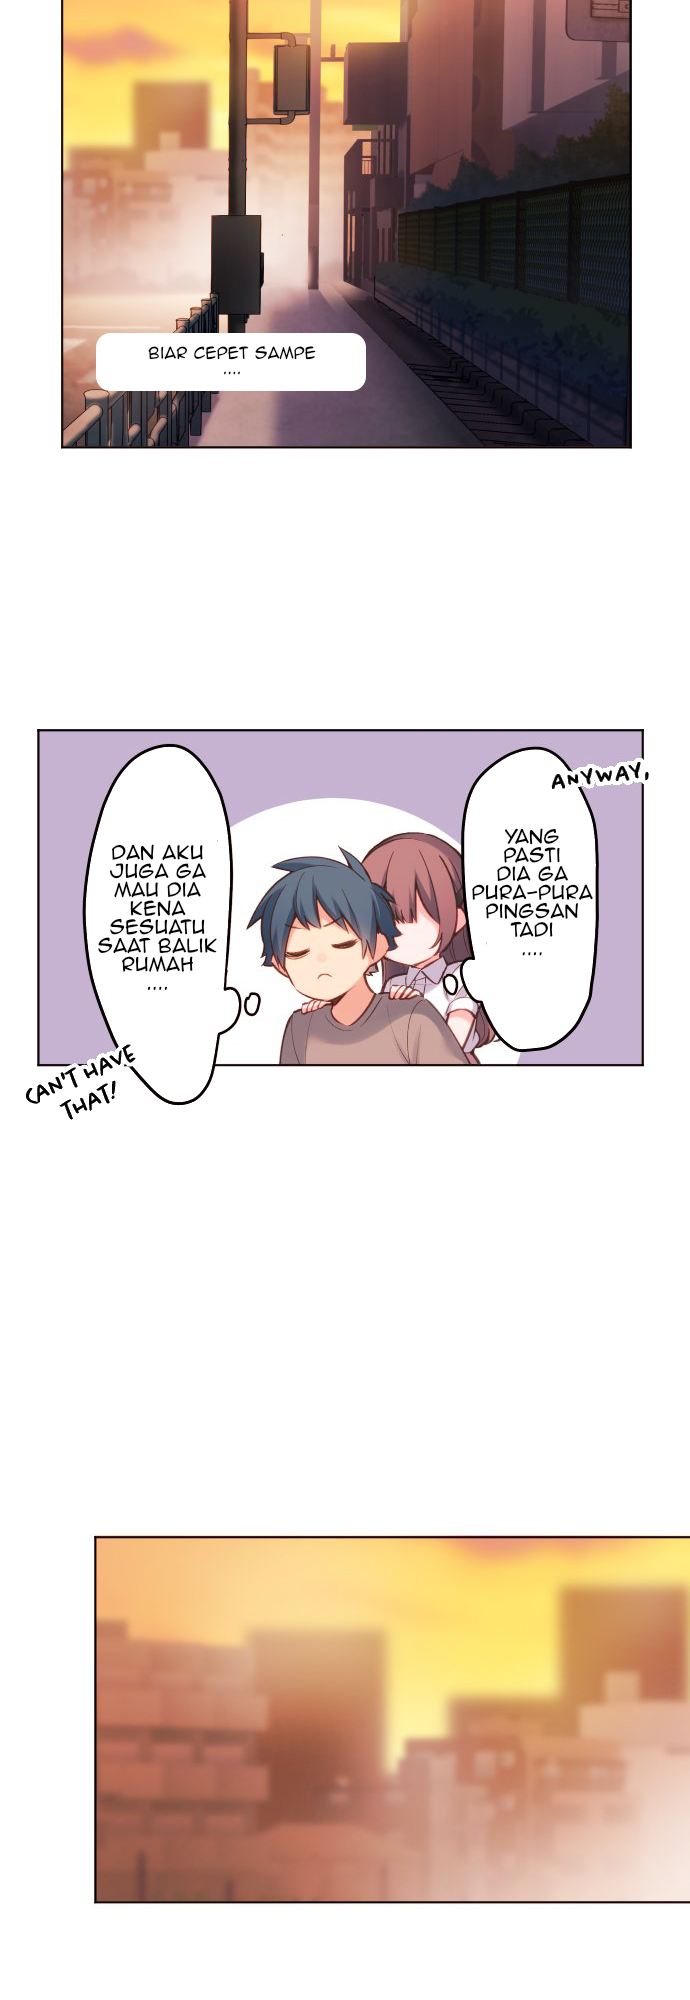 Waka-chan Is Flirty Again Chapter 25